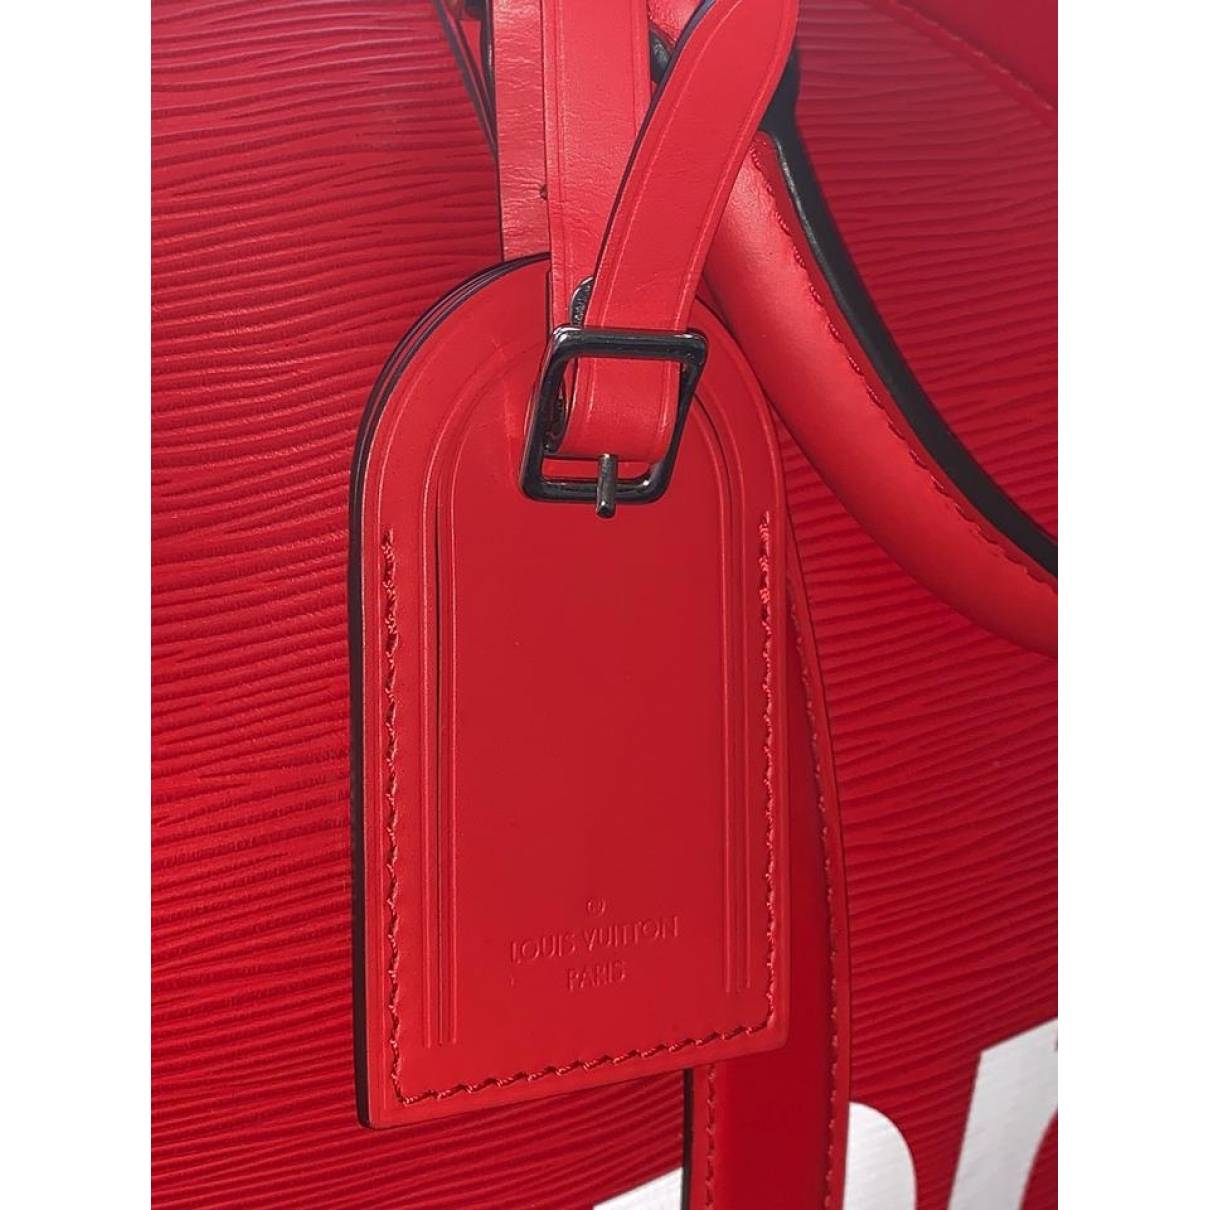 Louis Vuitton SUPREME luggage bag travel tag red/white Epi rare Authentic LV